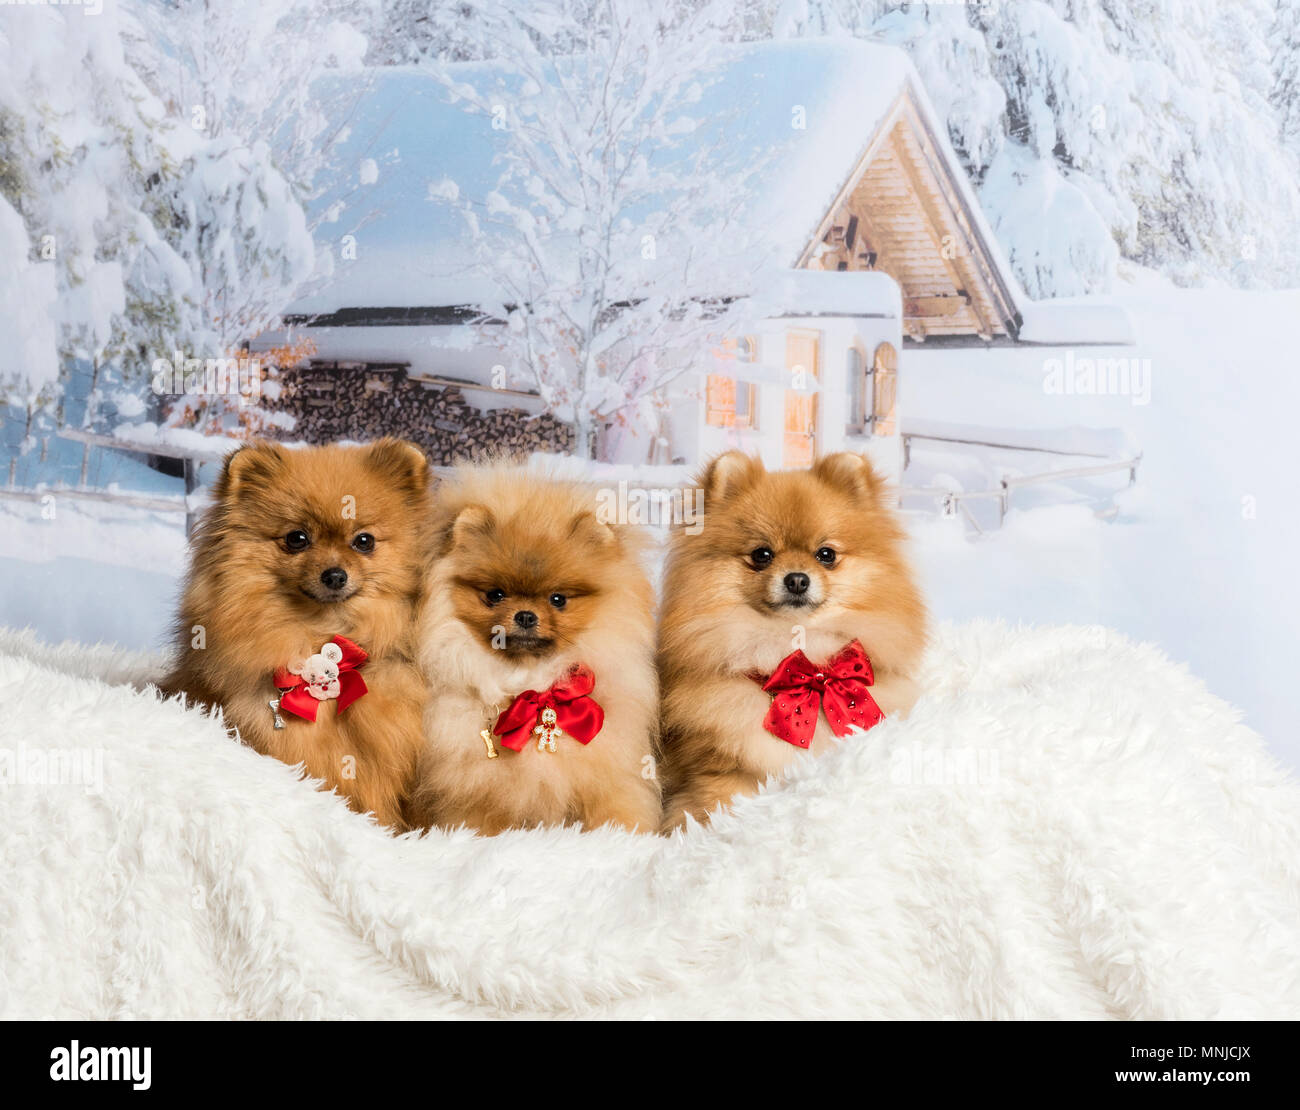 Pomeranians and Spitz sitting in winter scene wearing bow ties, portrait Stock Photo